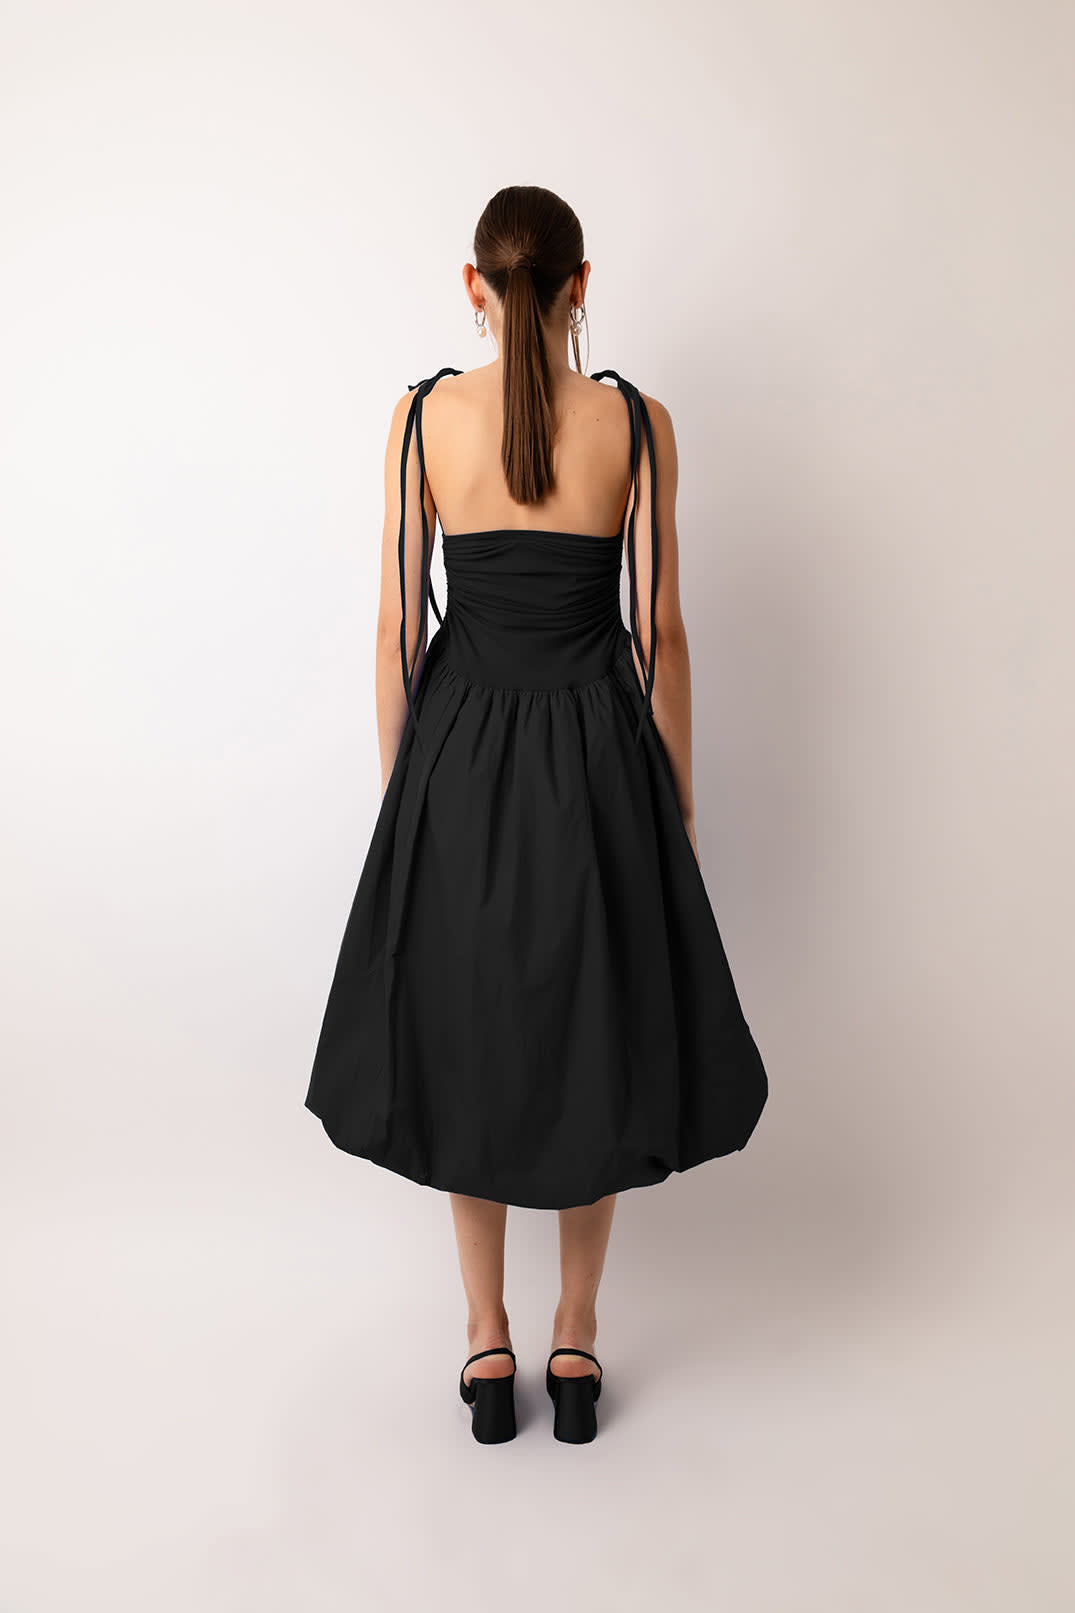 Alexa Black Puffball Cotton Dress by AMY LYNN